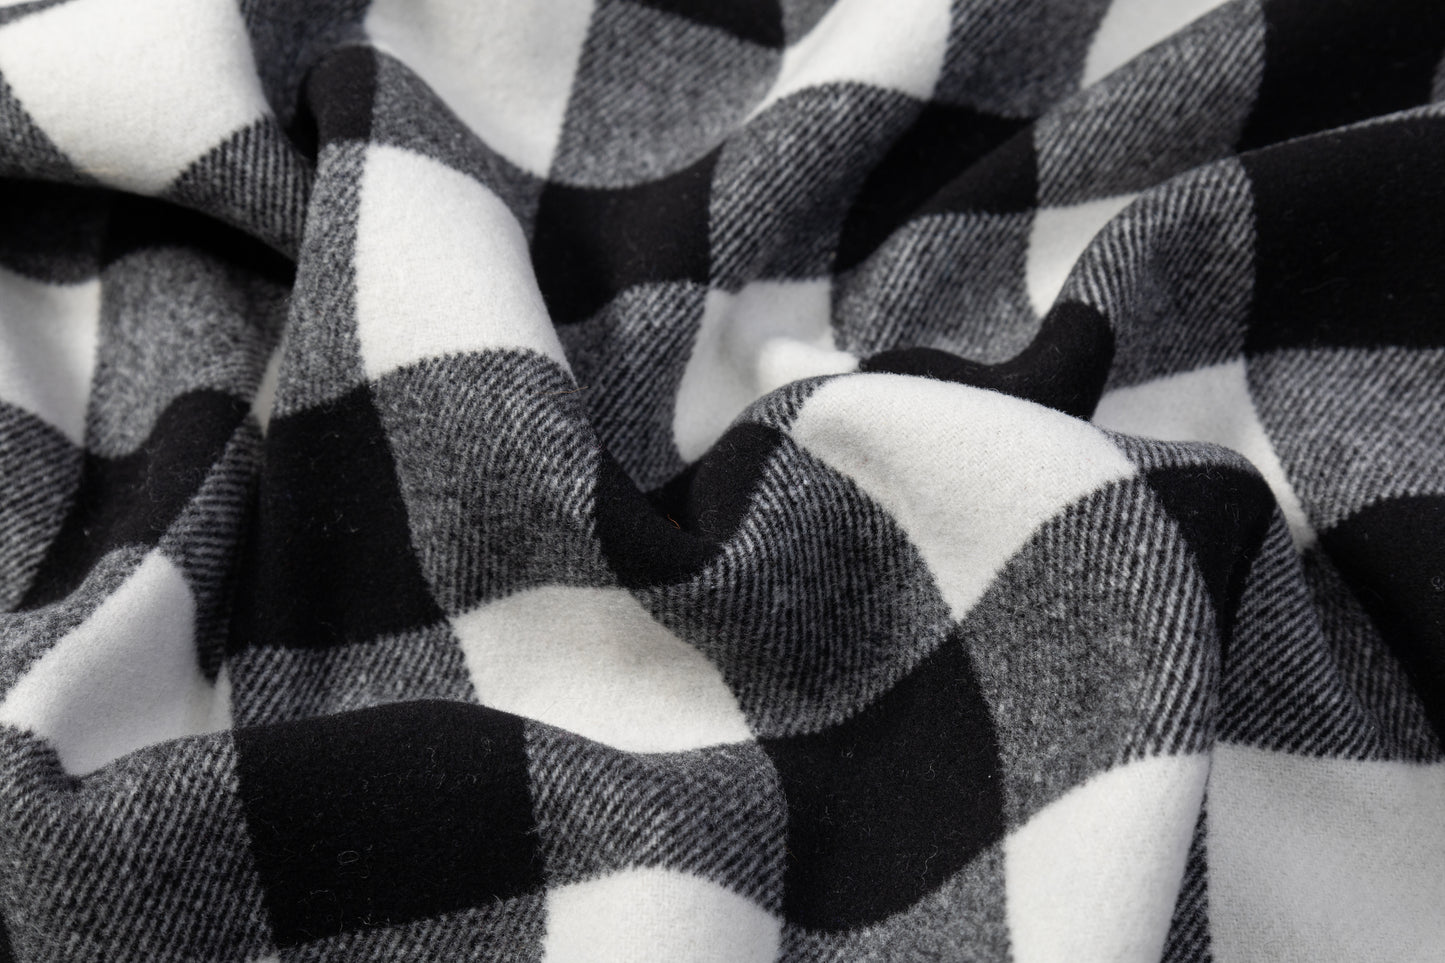 Double Faced Buffalo Plaid Italian Wool Coating - Black / White